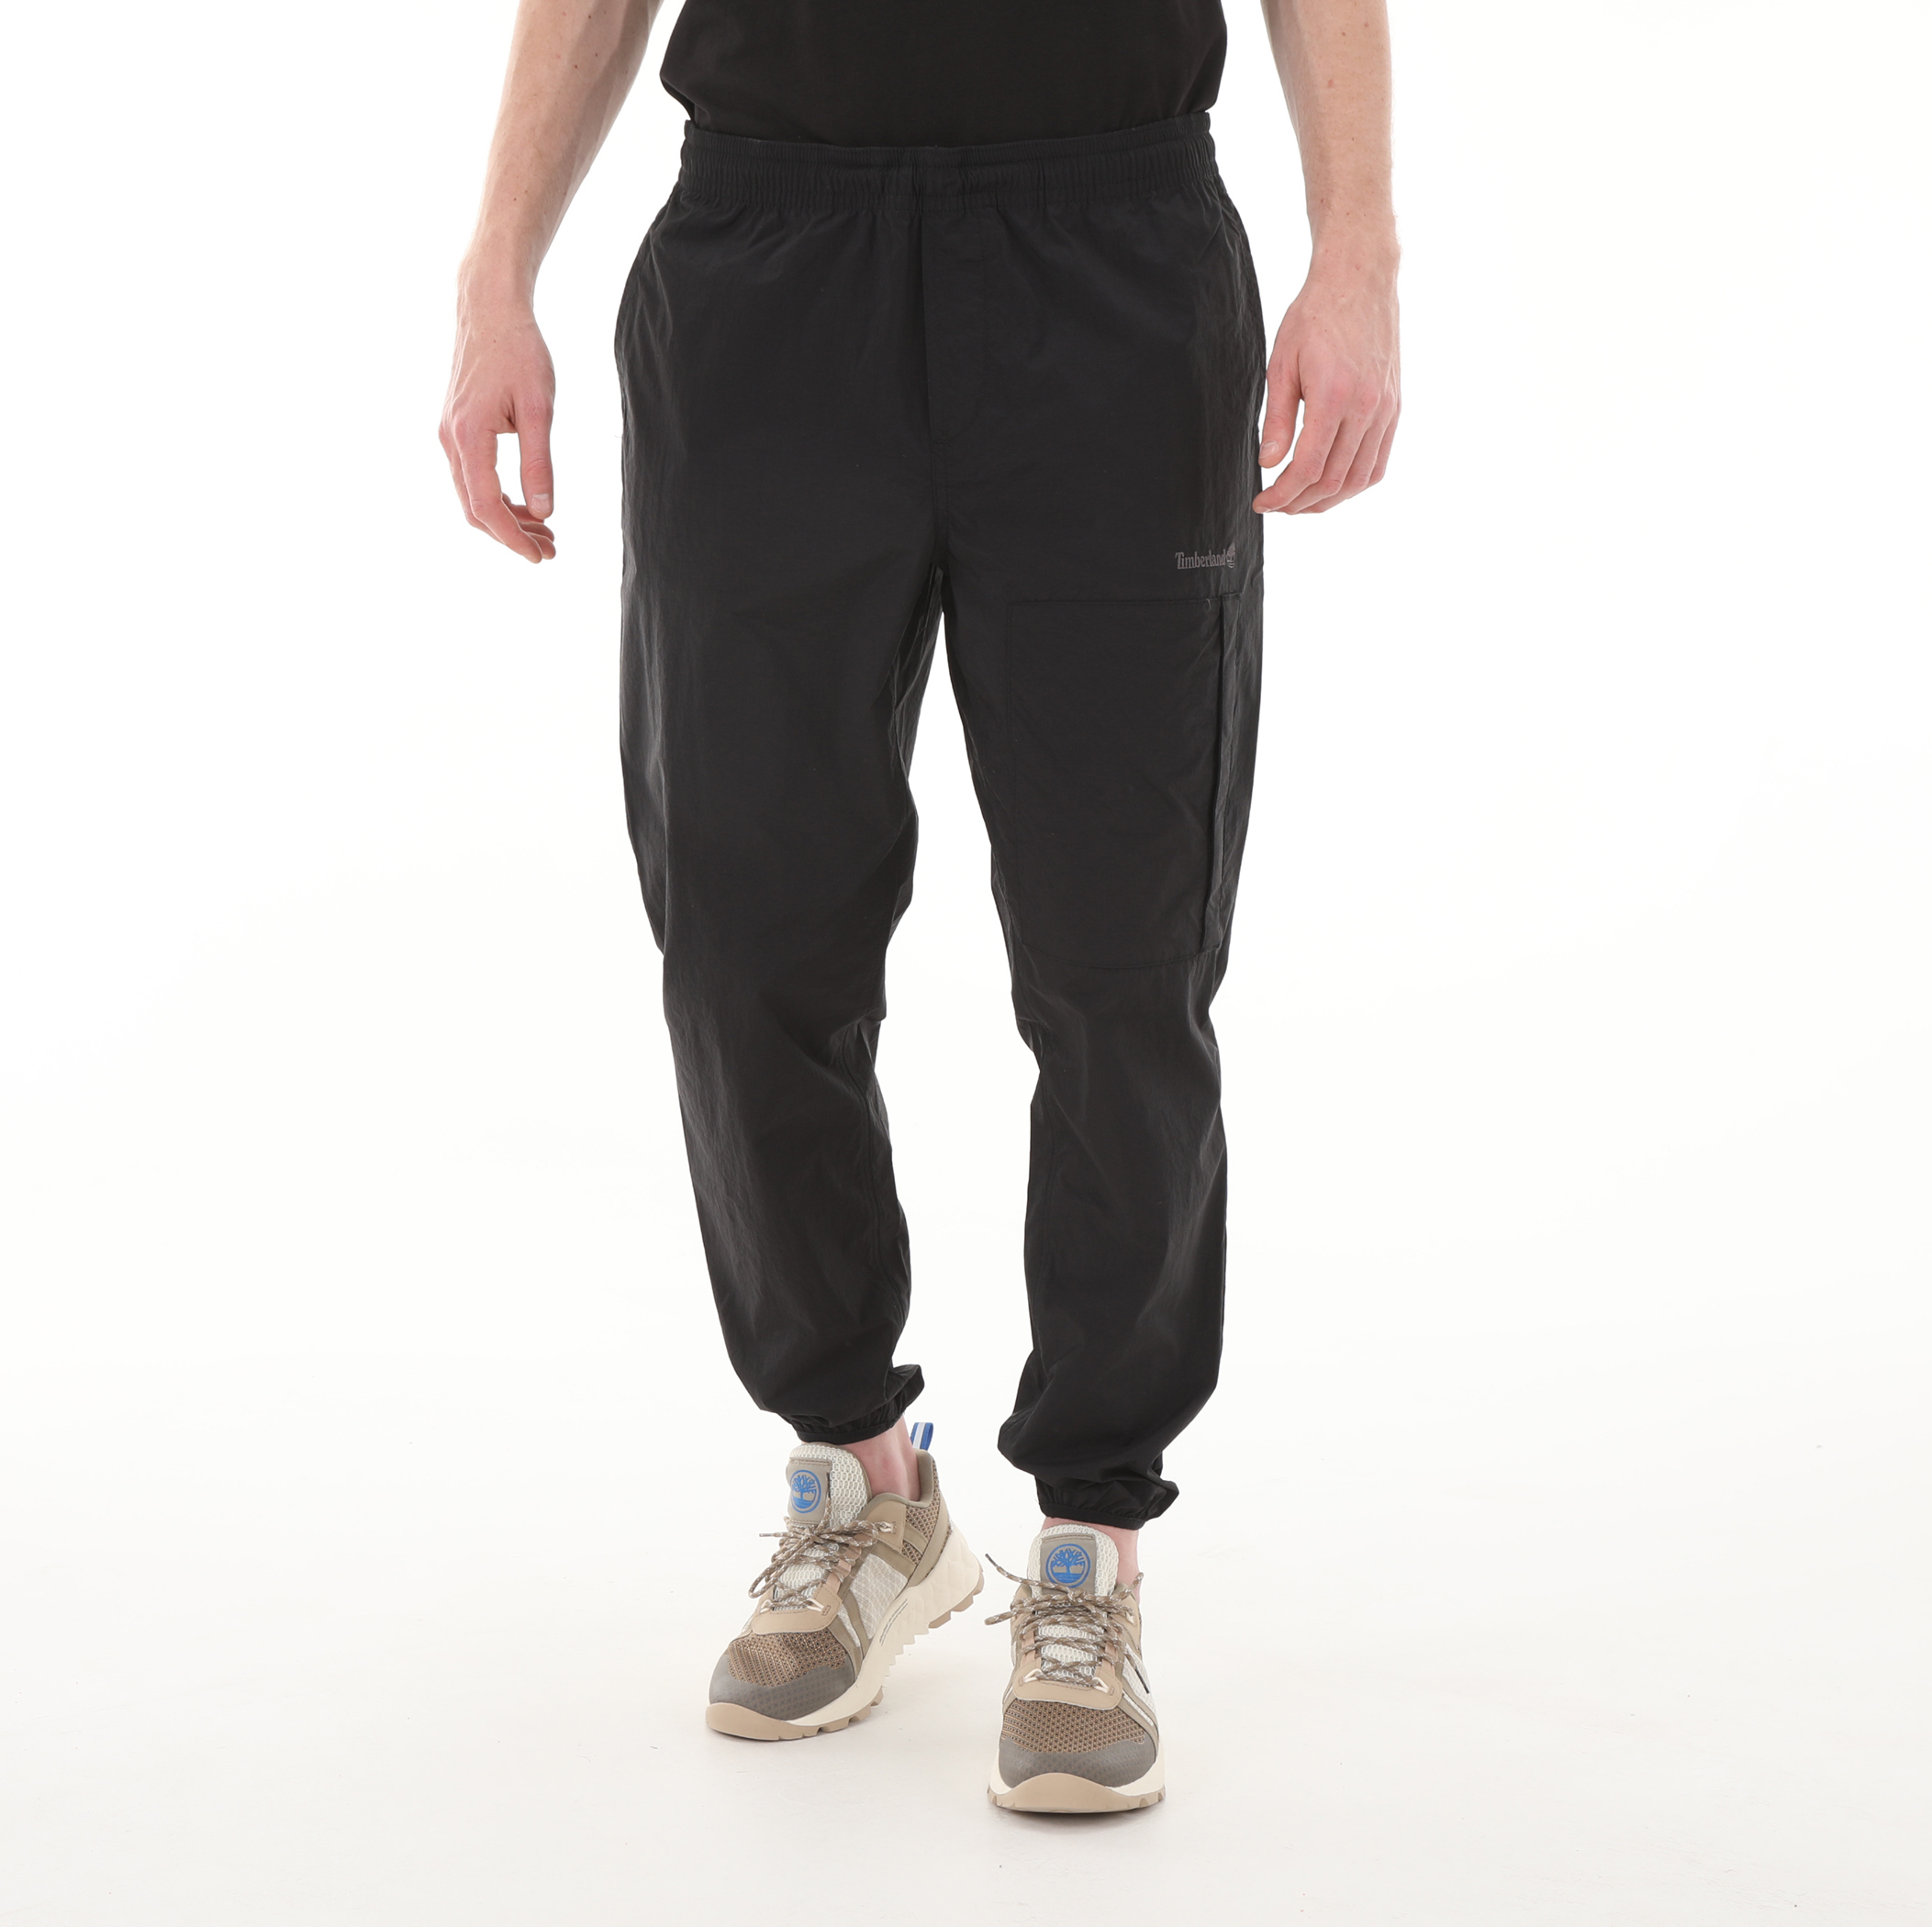 Мужские спортивные штаны Timberland Packable Anti-Uv Pant